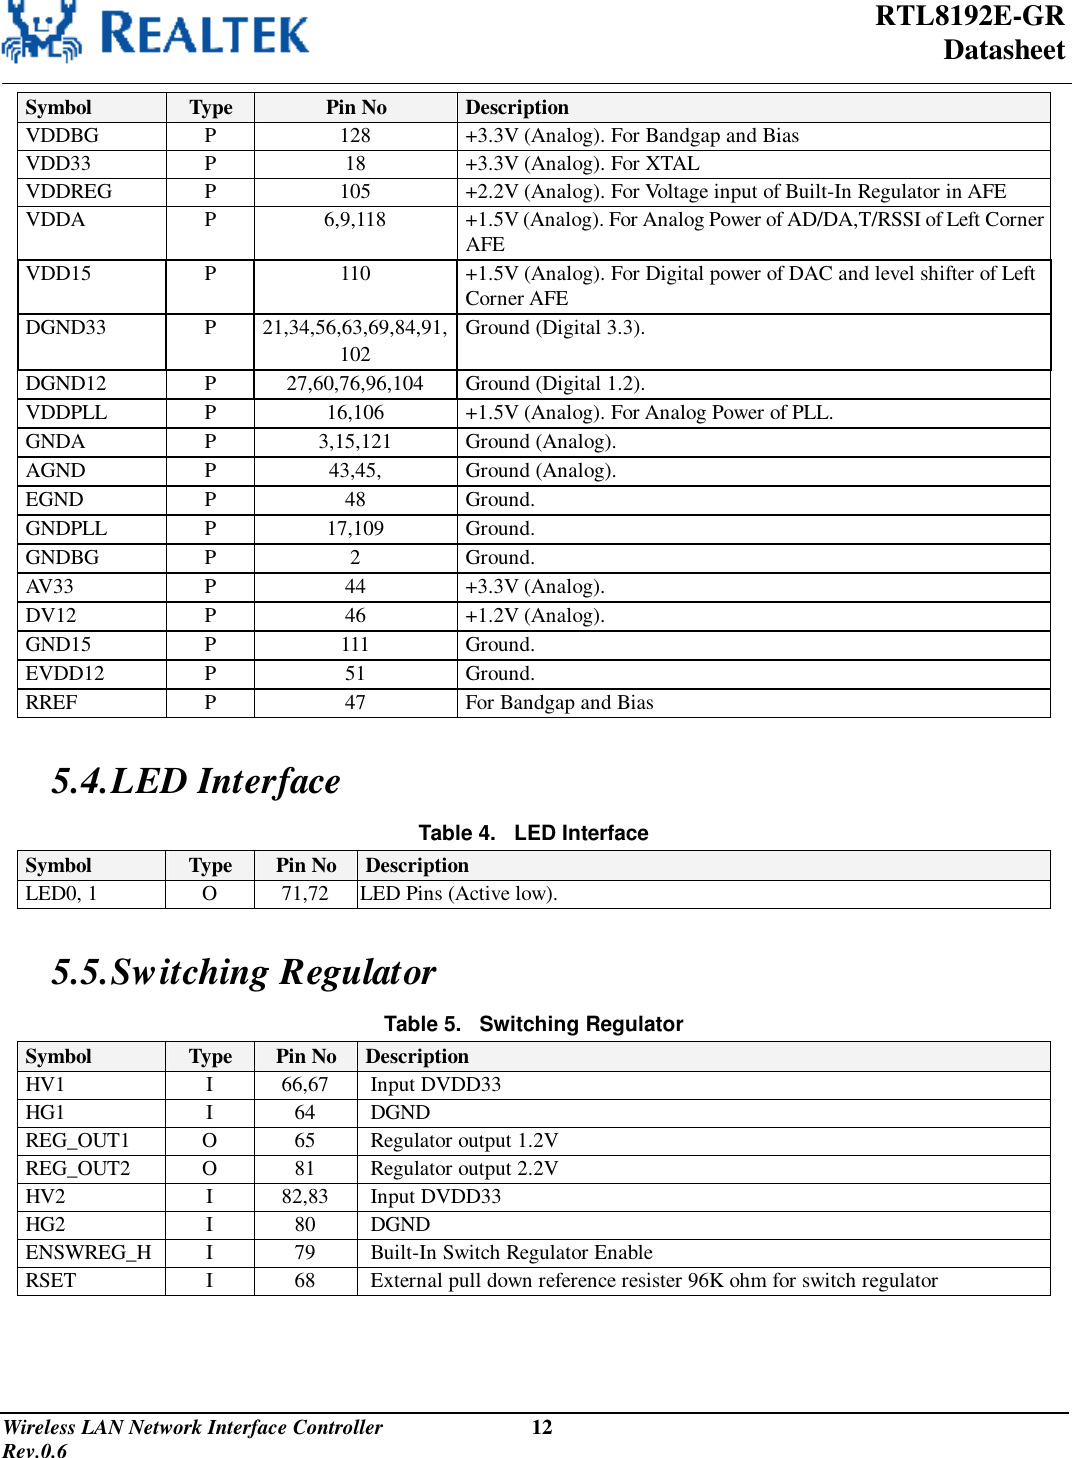  RTL8192E-GR Datasheet Wireless LAN Network Interface Controller                           12                                                                                         Rev.0.6  Symbol  Type  Pin No  Description VDDBG  P  128  +3.3V (Analog). For Bandgap and Bias VDD33  P  18  +3.3V (Analog). For XTAL VDDREG  P  105  +2.2V (Analog). For Voltage input of Built-In Regulator in AFE VDDA  P  6,9,118  +1.5V (Analog). For Analog Power of AD/DA,T/RSSI of Left Corner AFE VDD15  P  110  +1.5V (Analog). For Digital power of DAC and level shifter of Left Corner AFE DGND33  P  21,34,56,63,69,84,91, 102 Ground (Digital 3.3). DGND12  P  27,60,76,96,104  Ground (Digital 1.2). VDDPLL  P  16,106  +1.5V (Analog). For Analog Power of PLL. GNDA  P  3,15,121  Ground (Analog). AGND  P  43,45,  Ground (Analog). EGND  P  48  Ground. GNDPLL  P  17,109  Ground. GNDBG  P  2  Ground. AV33  P  44  +3.3V (Analog). DV12  P  46  +1.2V (Analog). GND15  P  111  Ground. EVDD12  P  51  Ground. RREF  P  47  For Bandgap and Bias  5.4. LED Interface Table 4.   LED Interface Symbol  Type  Pin No  Description LED0, 1  O  71,72  LED Pins (Active low).  5.5. Switching Regulator Table 5.   Switching Regulator Symbol  Type  Pin No  Description HV1  I  66,67  Input DVDD33 HG1  I  64  DGND REG_OUT1  O  65  Regulator output 1.2V REG_OUT2  O  81  Regulator output 2.2V HV2  I  82,83  Input DVDD33 HG2  I  80  DGND ENSWREG_H I  79  Built-In Switch Regulator Enable RSET  I  68  External pull down reference resister 96K ohm for switch regulator      